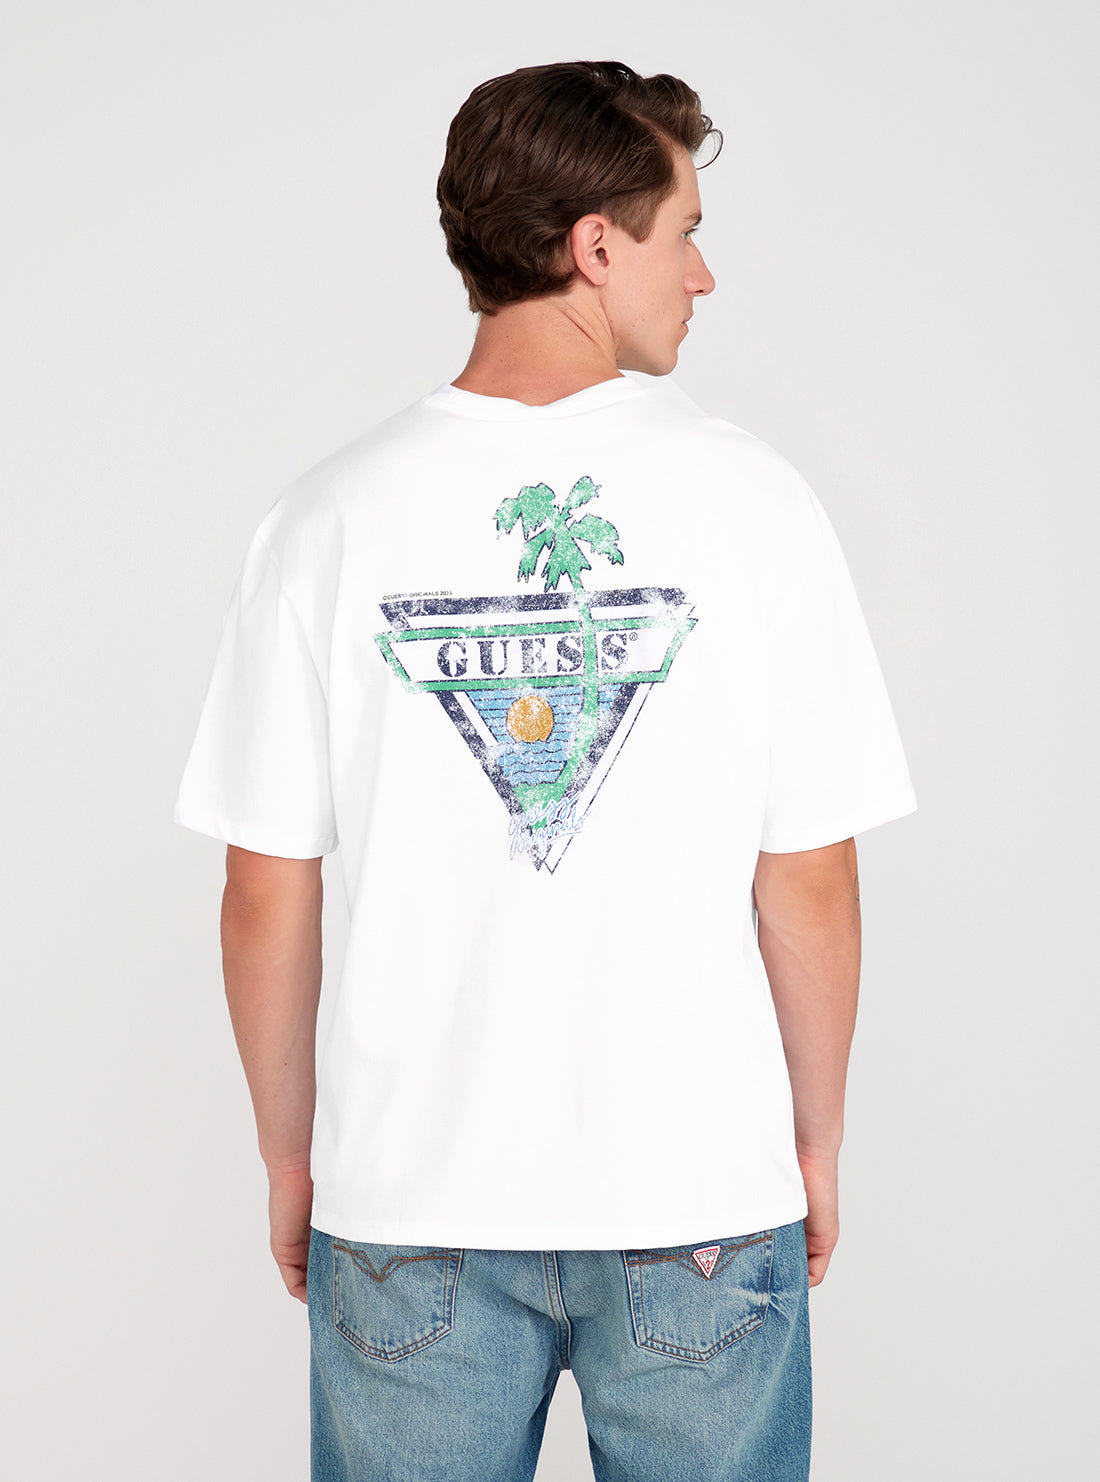 Guess Originals White Palms T-Shirt back view